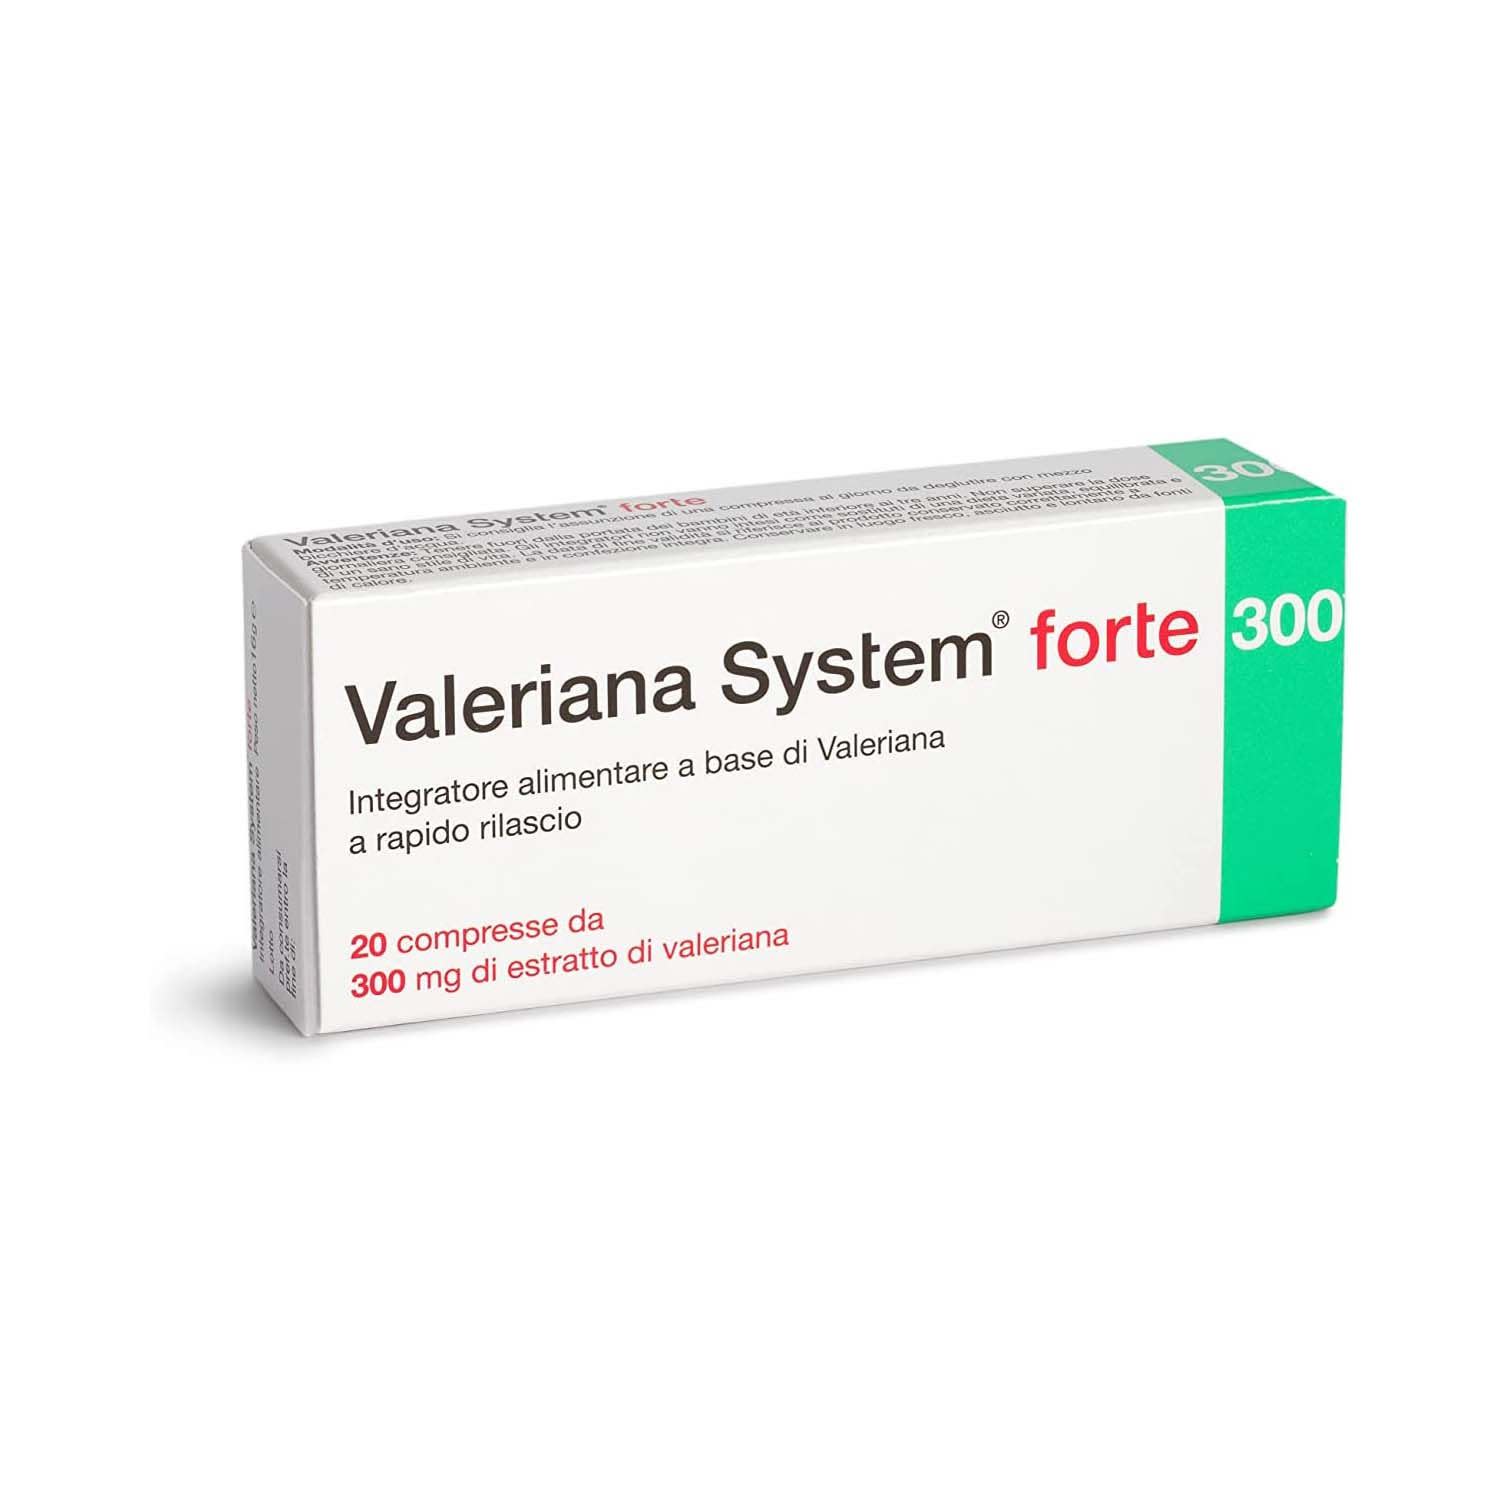 930856620 - Sanifarma Valeriana System Forte  300mg Integratore Rapido Rilascio 20 compresse - 4721892_2.jpg